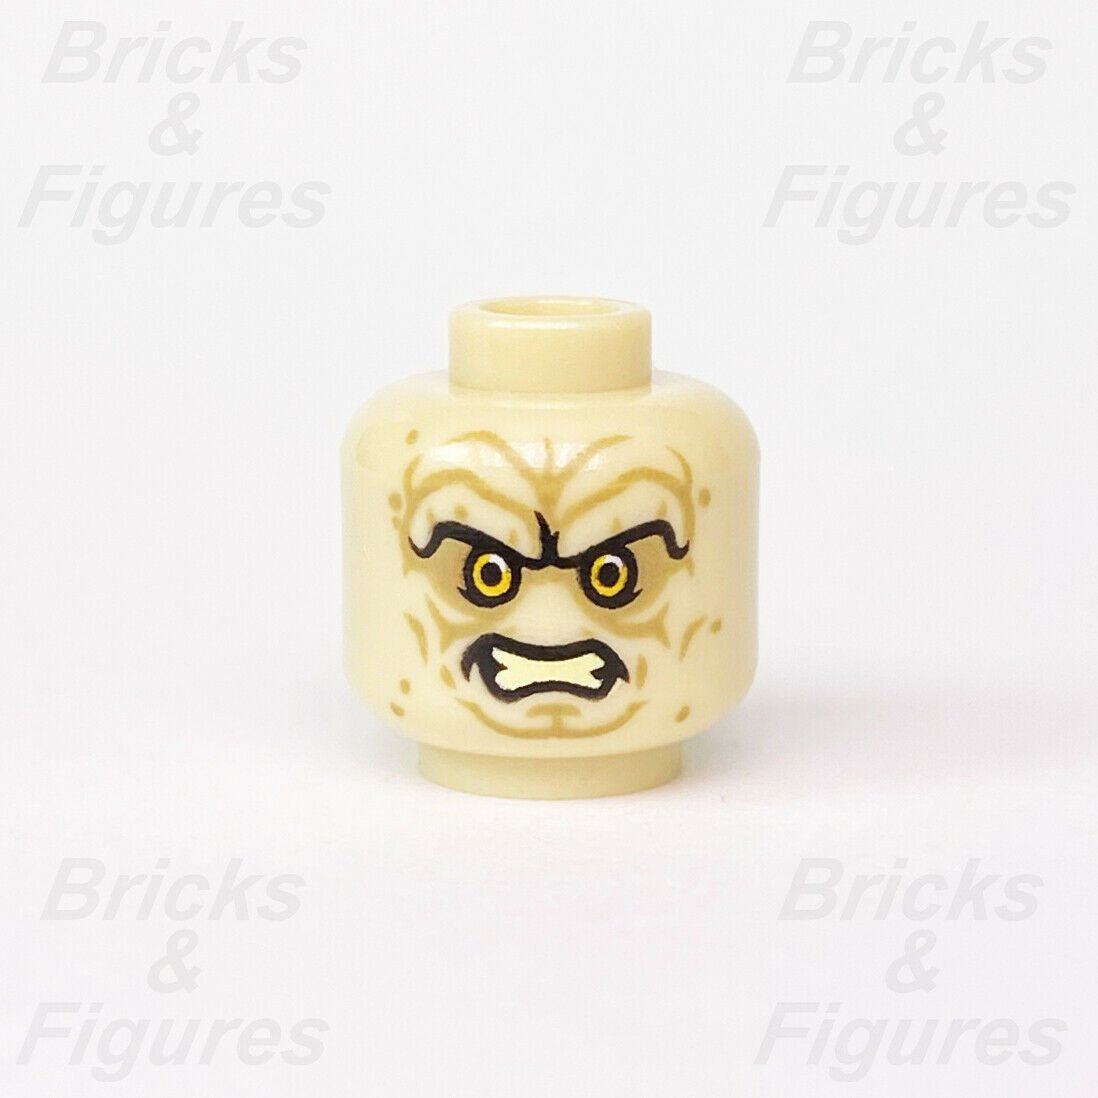 Star Wars LEGO Emperor Palpatine Darth Sidious Head Minifigure Part 75183 75159 - Bricks & Figures